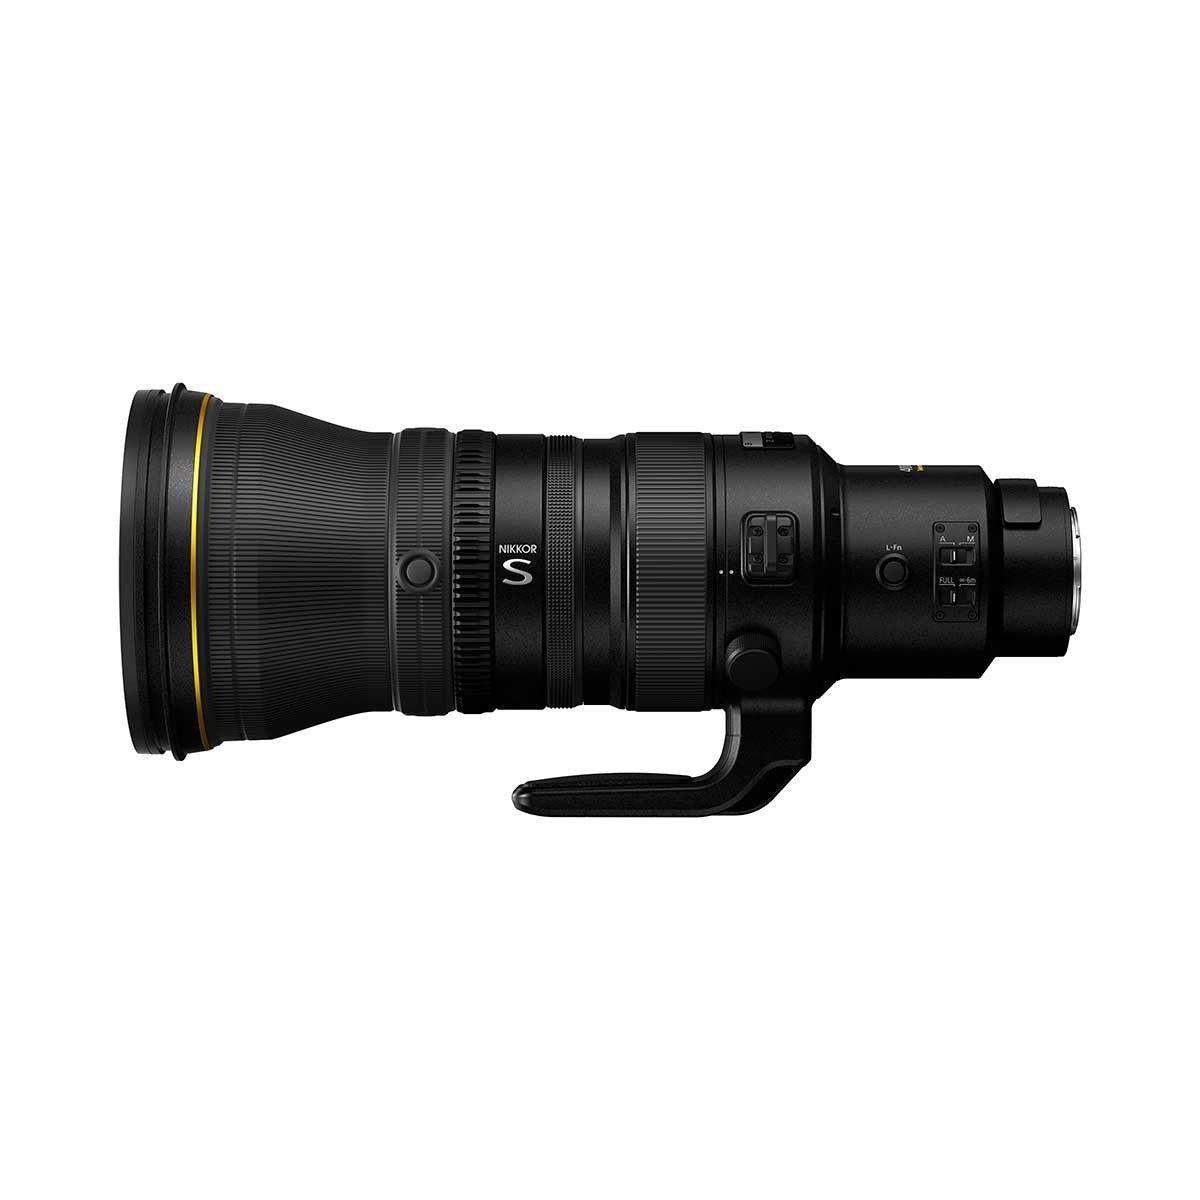 Product Image of Nikon NIKKOR Z 400mm f2.8 TC VR S Lens - Black